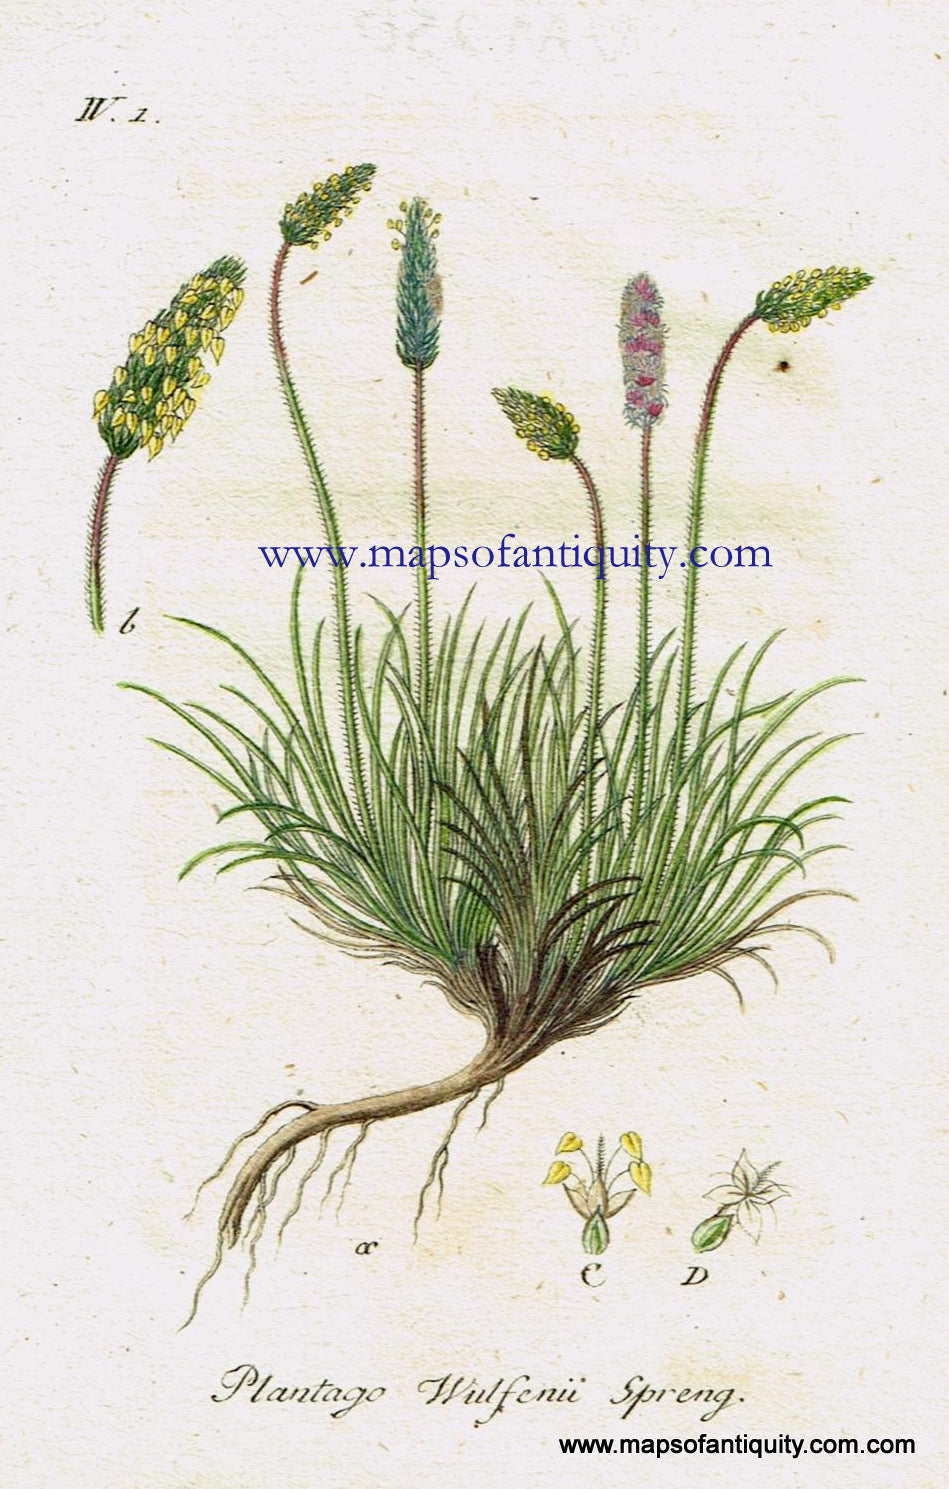 Antique-Hand-Colored-Botanical-Print-Plantago-Wulfenii-Sprengel-similar-to-Plantago-lanceolata-or-narrowleaf-plantain-Antique-Prints--Natural-History-Botanical-1808-Jacob-Sturm-Maps-Of-Antiquity